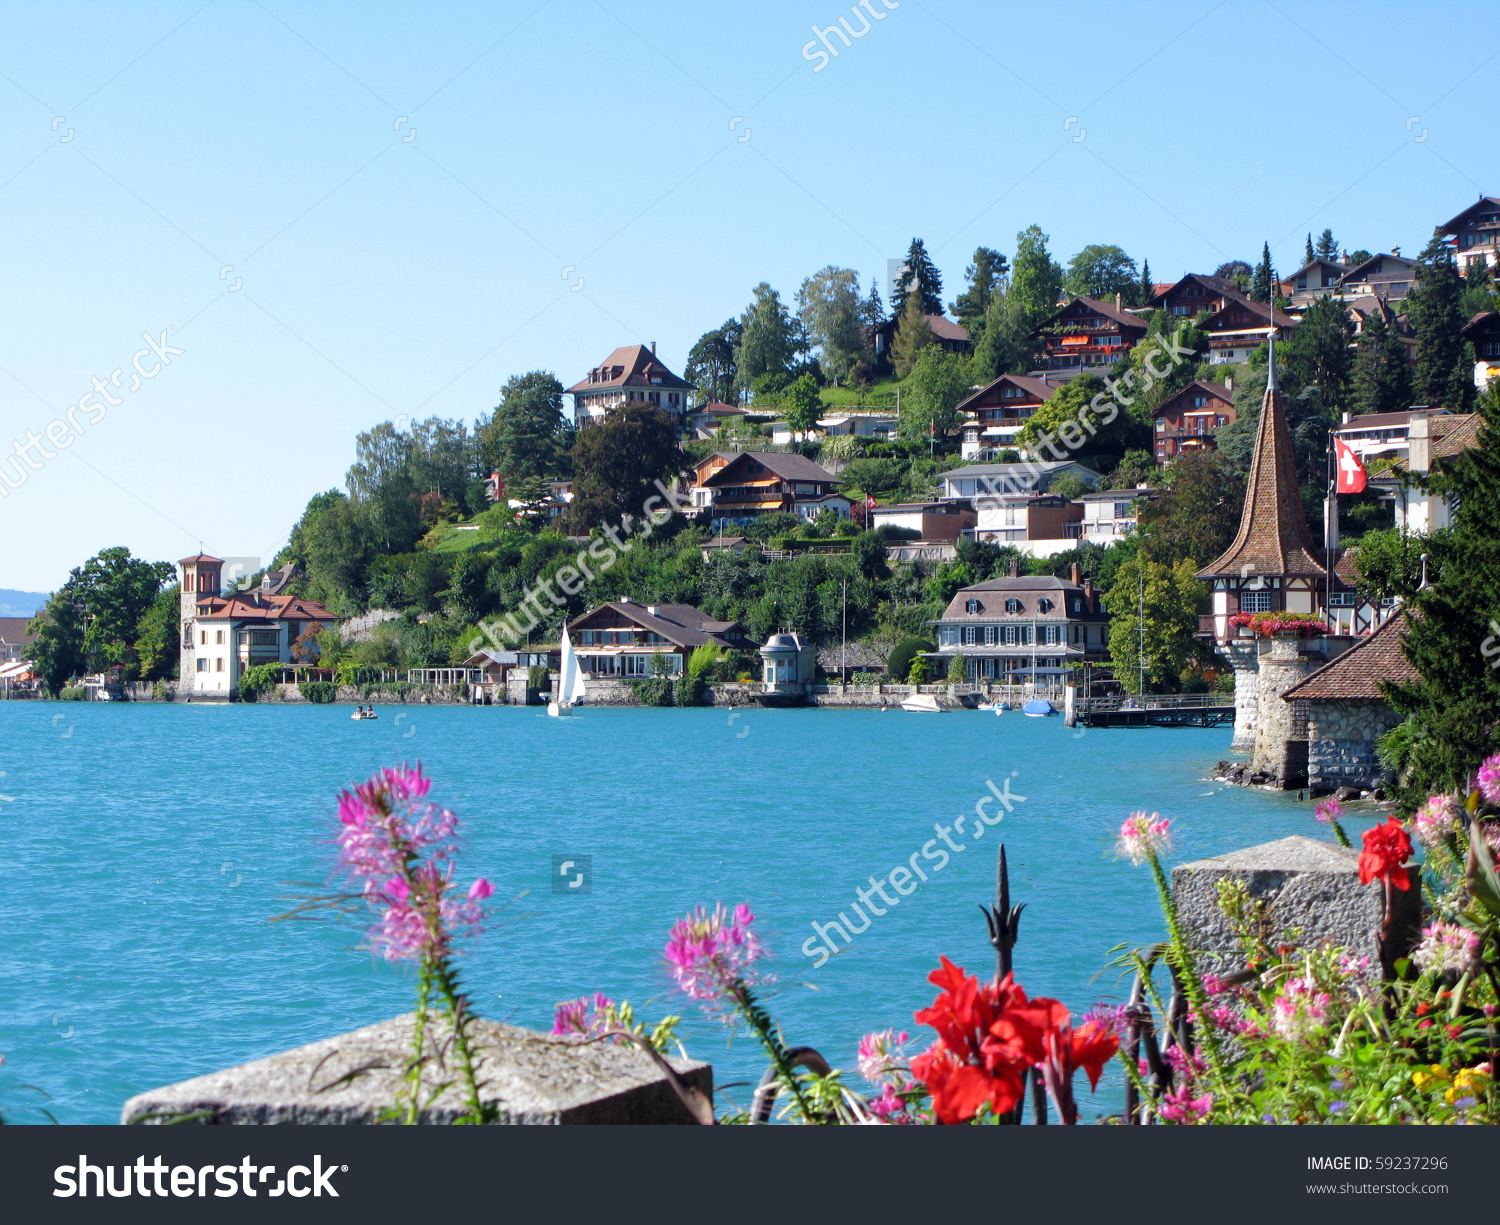 Lake Thun Switzerland Stock Photo 59237296.